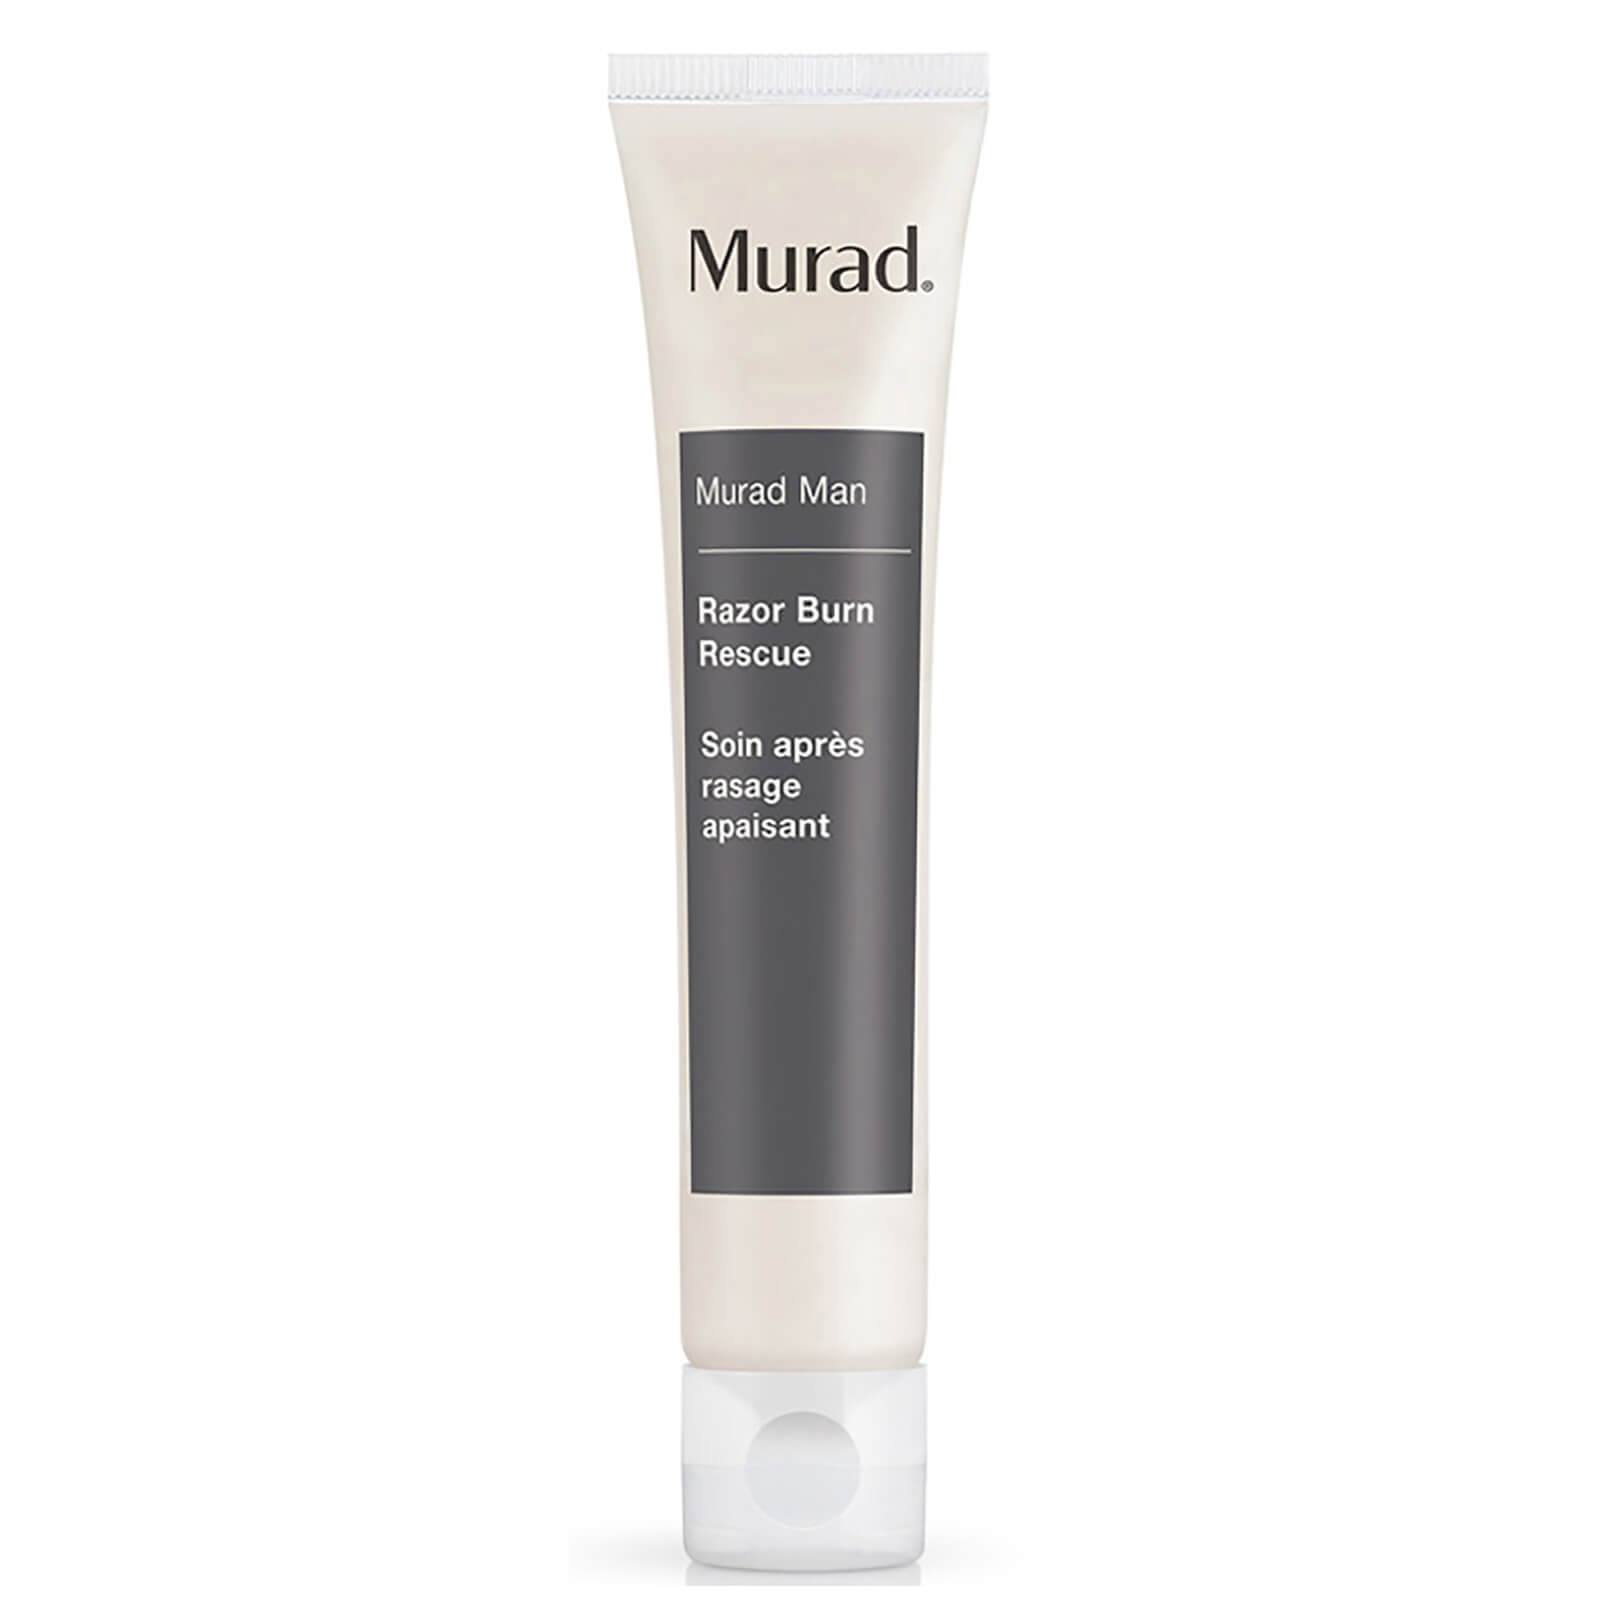 Murad Man trattamento lenitivo post rasatura (45 ml)